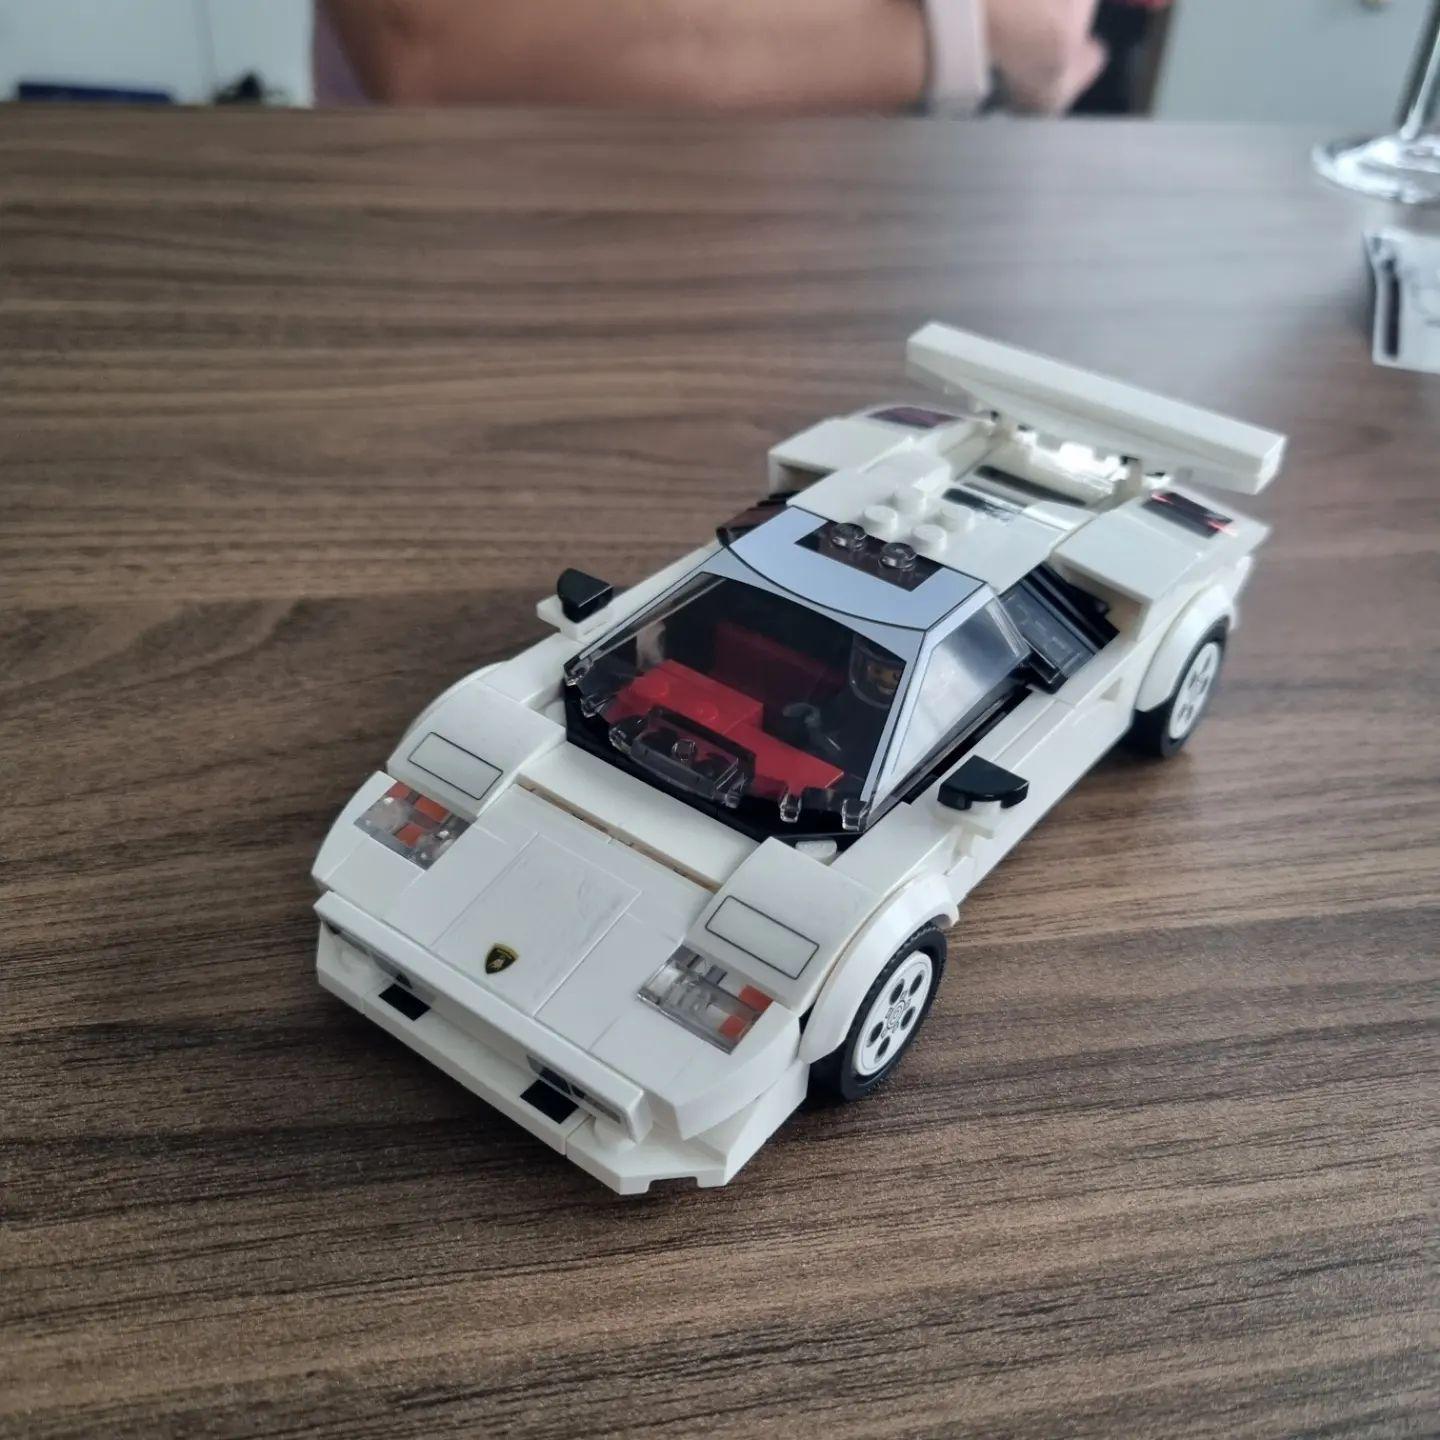 Juego de construcción LEGO Speed ​​Champions Lamborghini Countach